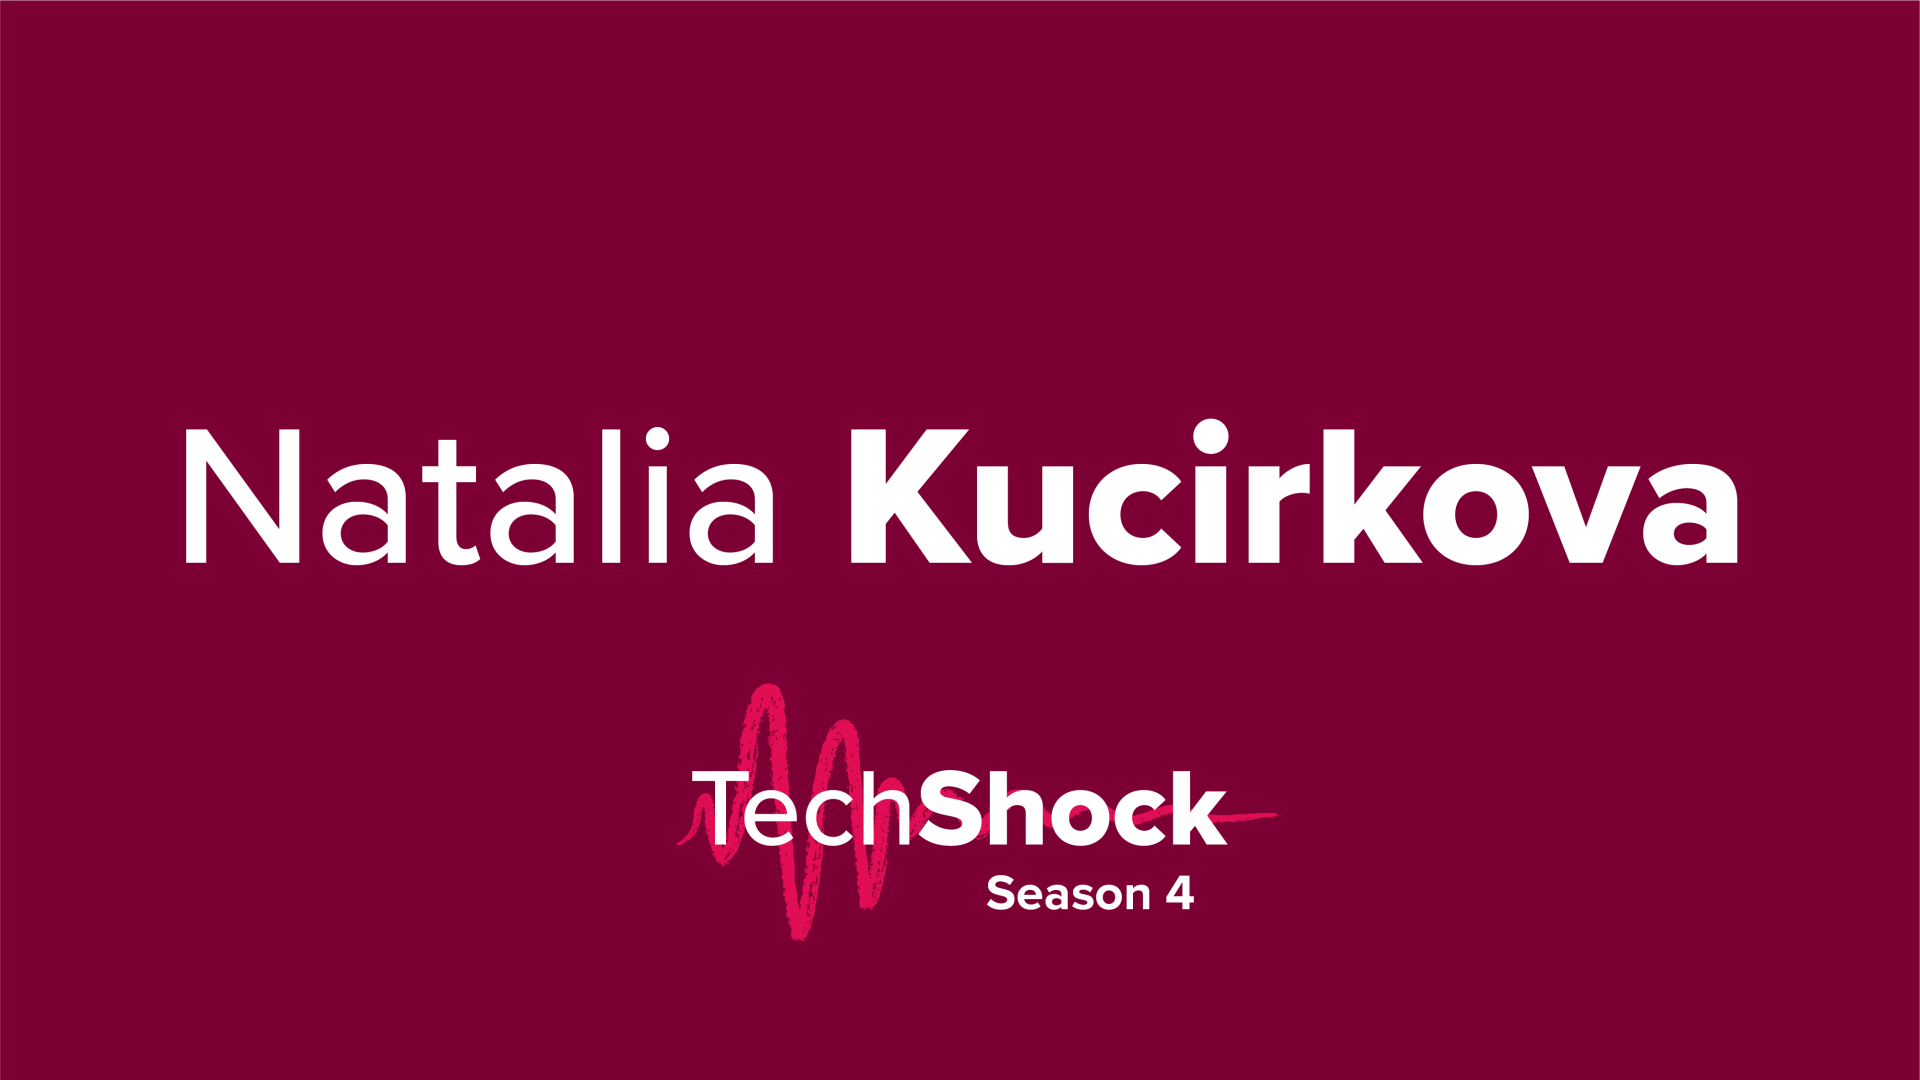 The Tech Shock Podcast - Natalia Kucirkova 